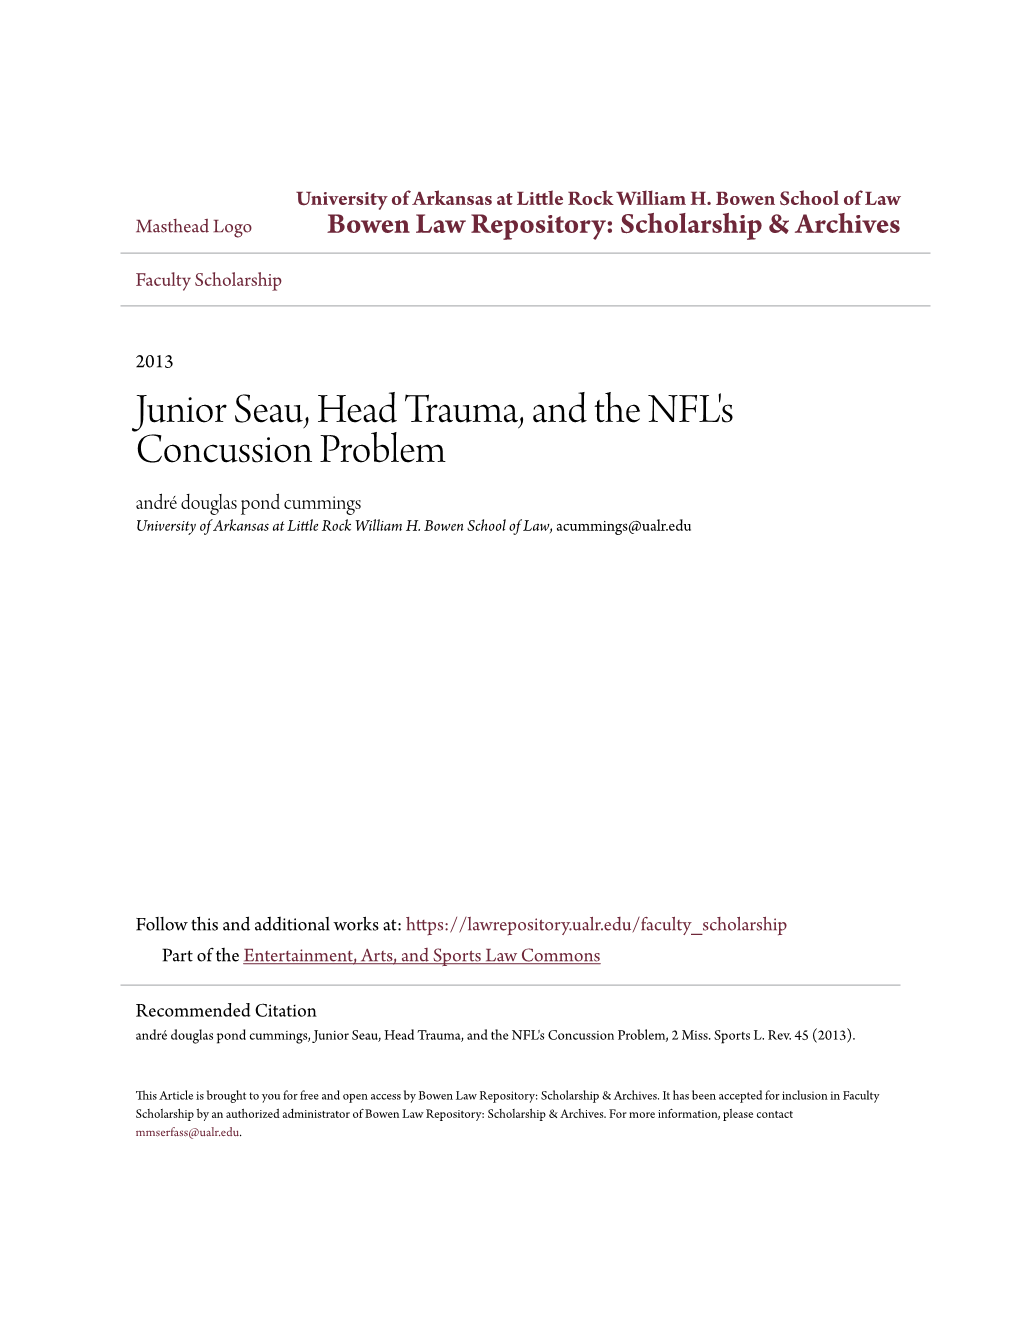 Junior Seau, Head Trauma, and the NFL's Concussion Problem André Douglas Pond Cummings University of Arkansas at Little Rock William H